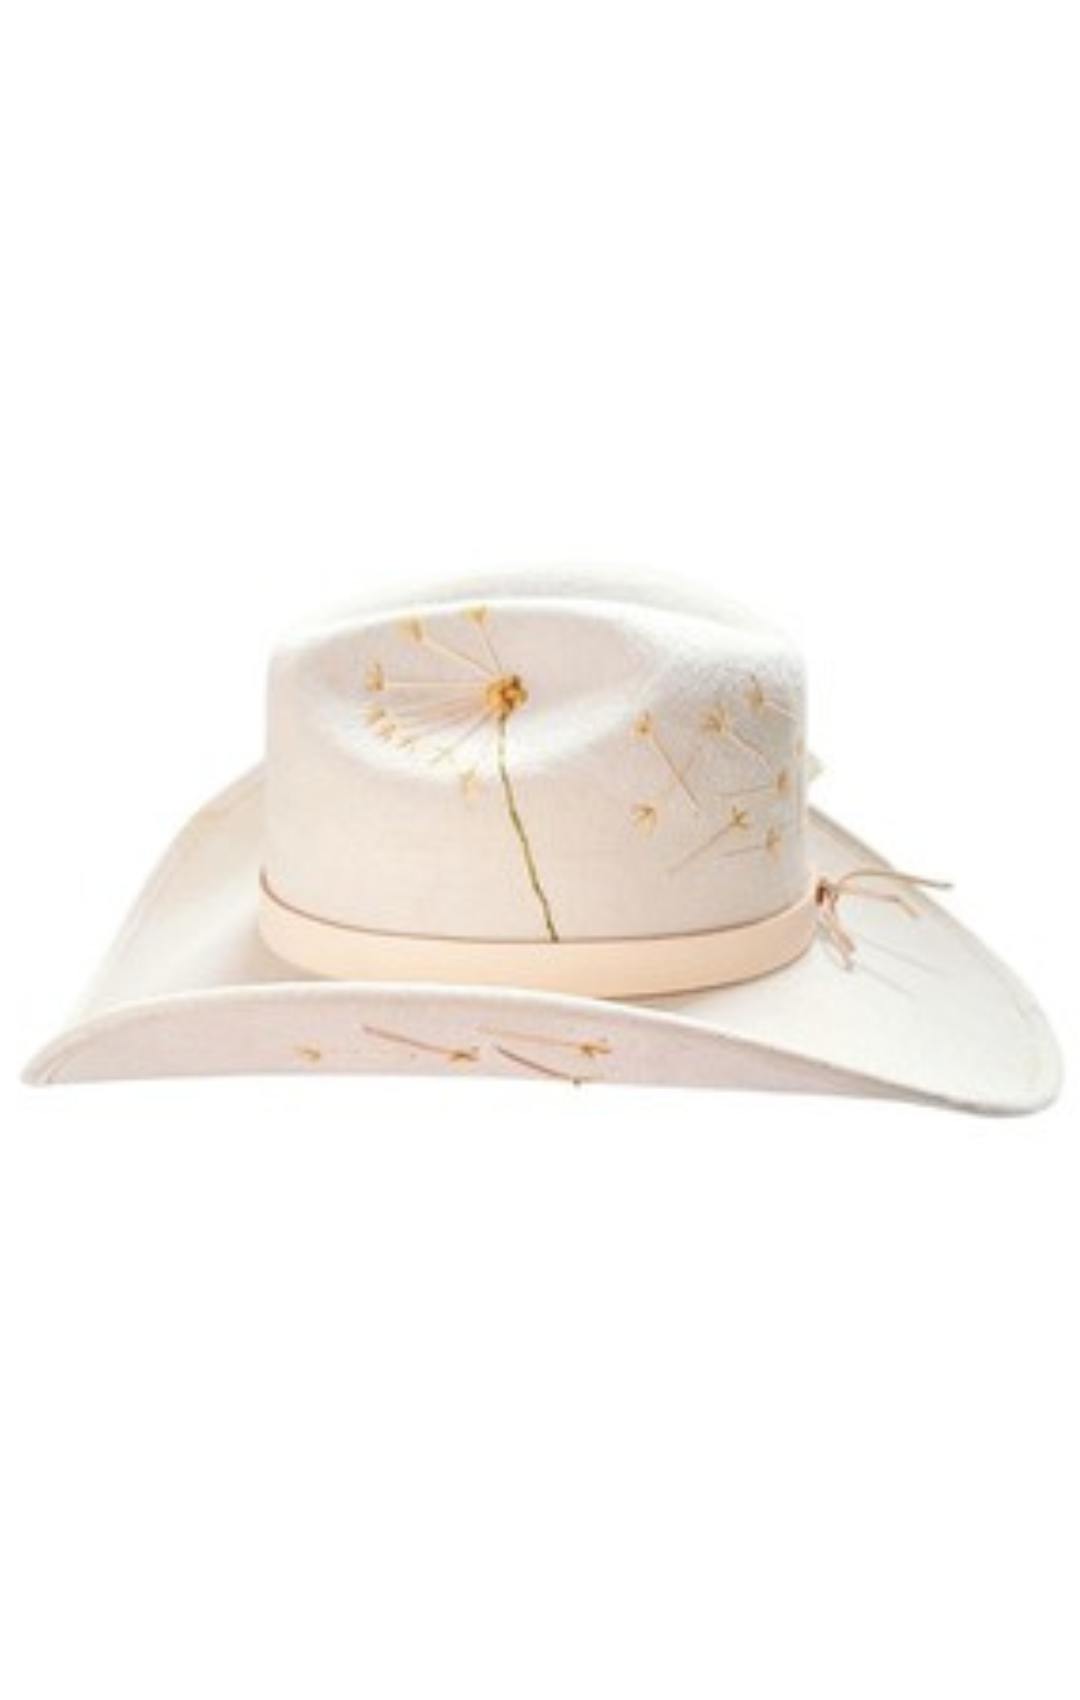 Pax Feather Cowboy Hat